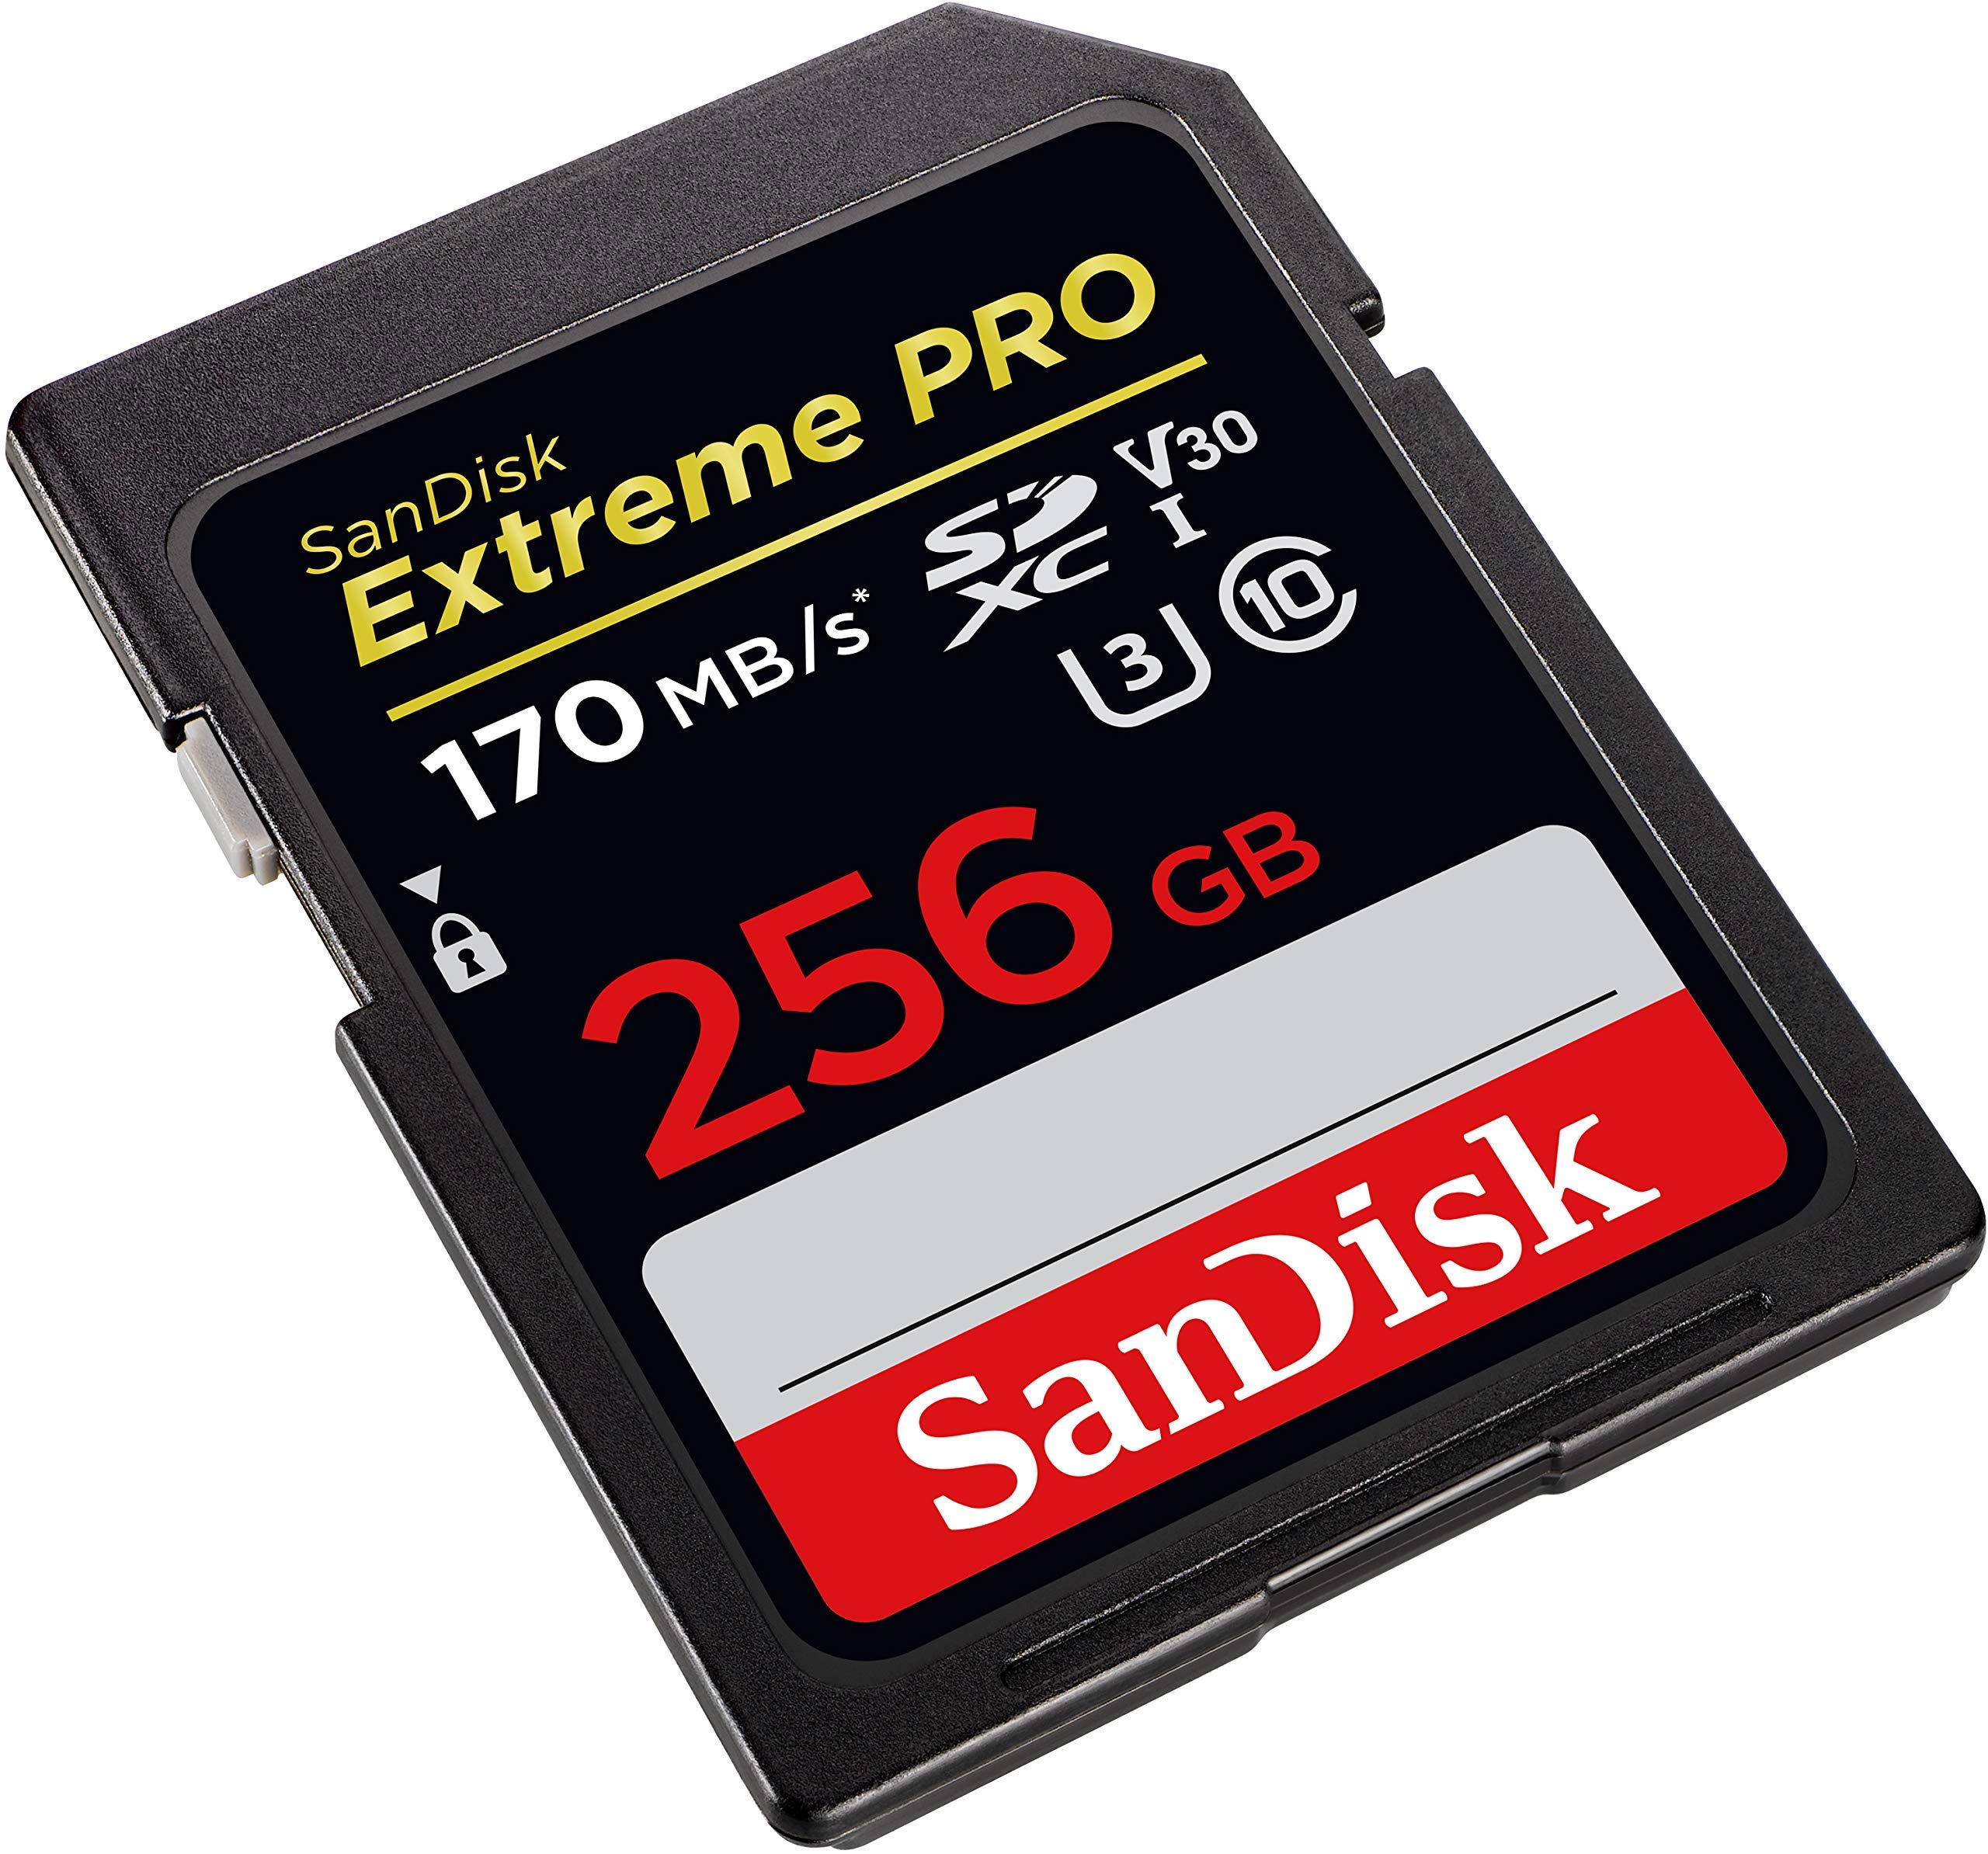 SanDisk 256GB Extreme PRO SDXC UHS-I Card - C10, U3, V30, 4K UHD, SD Card - SDSDXXY-256G-GN4IN